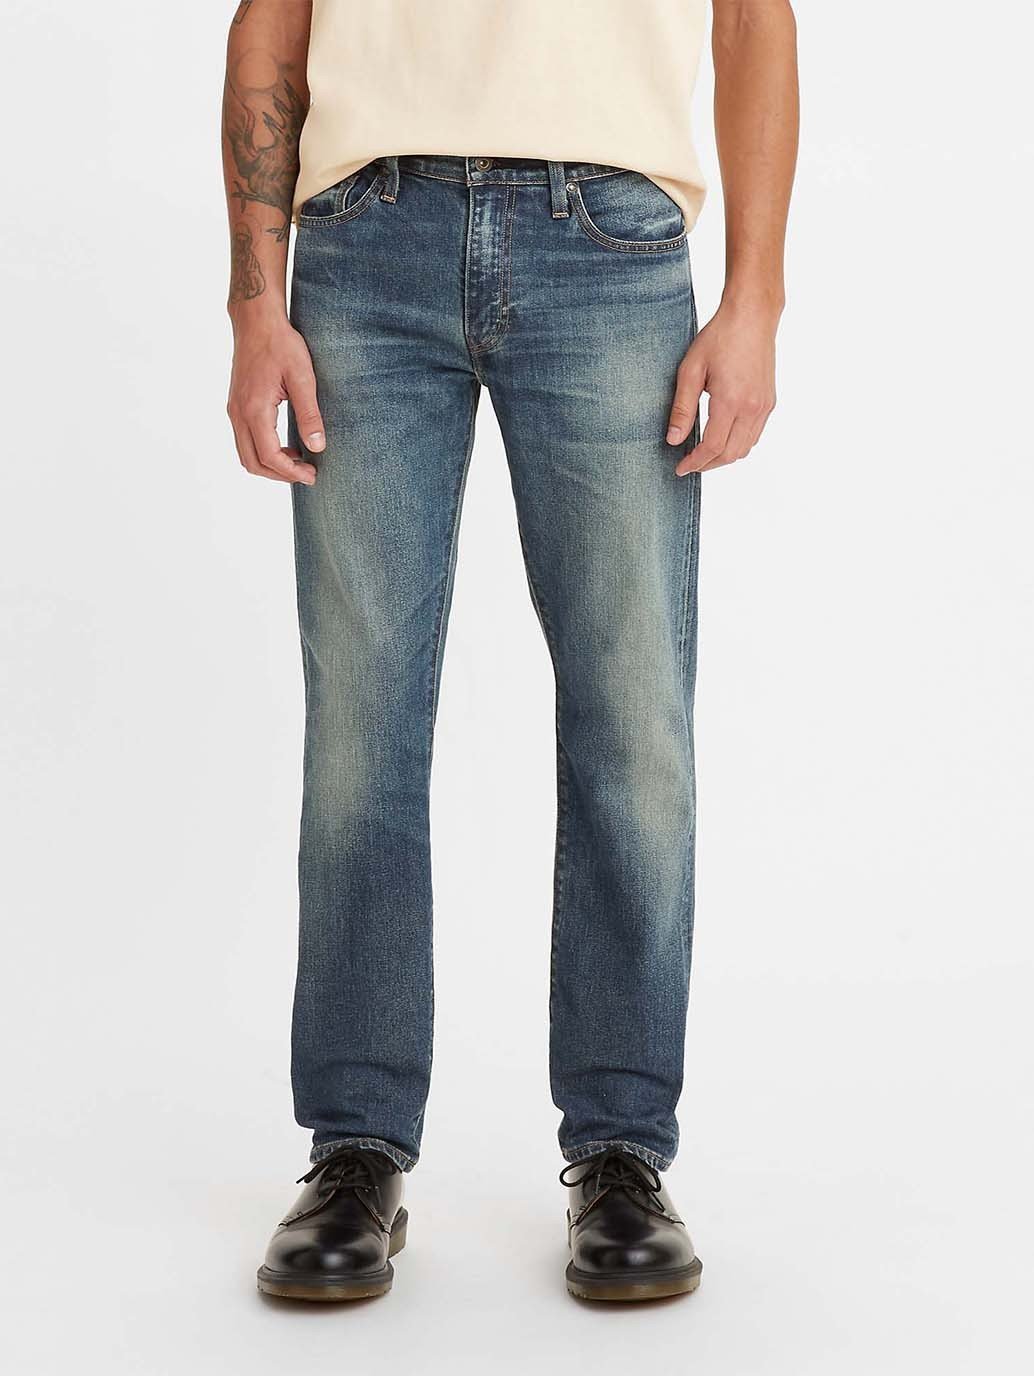 Buy Levi's® Made in Japan Men's 511™ Slim Jeans | Levi's® Official